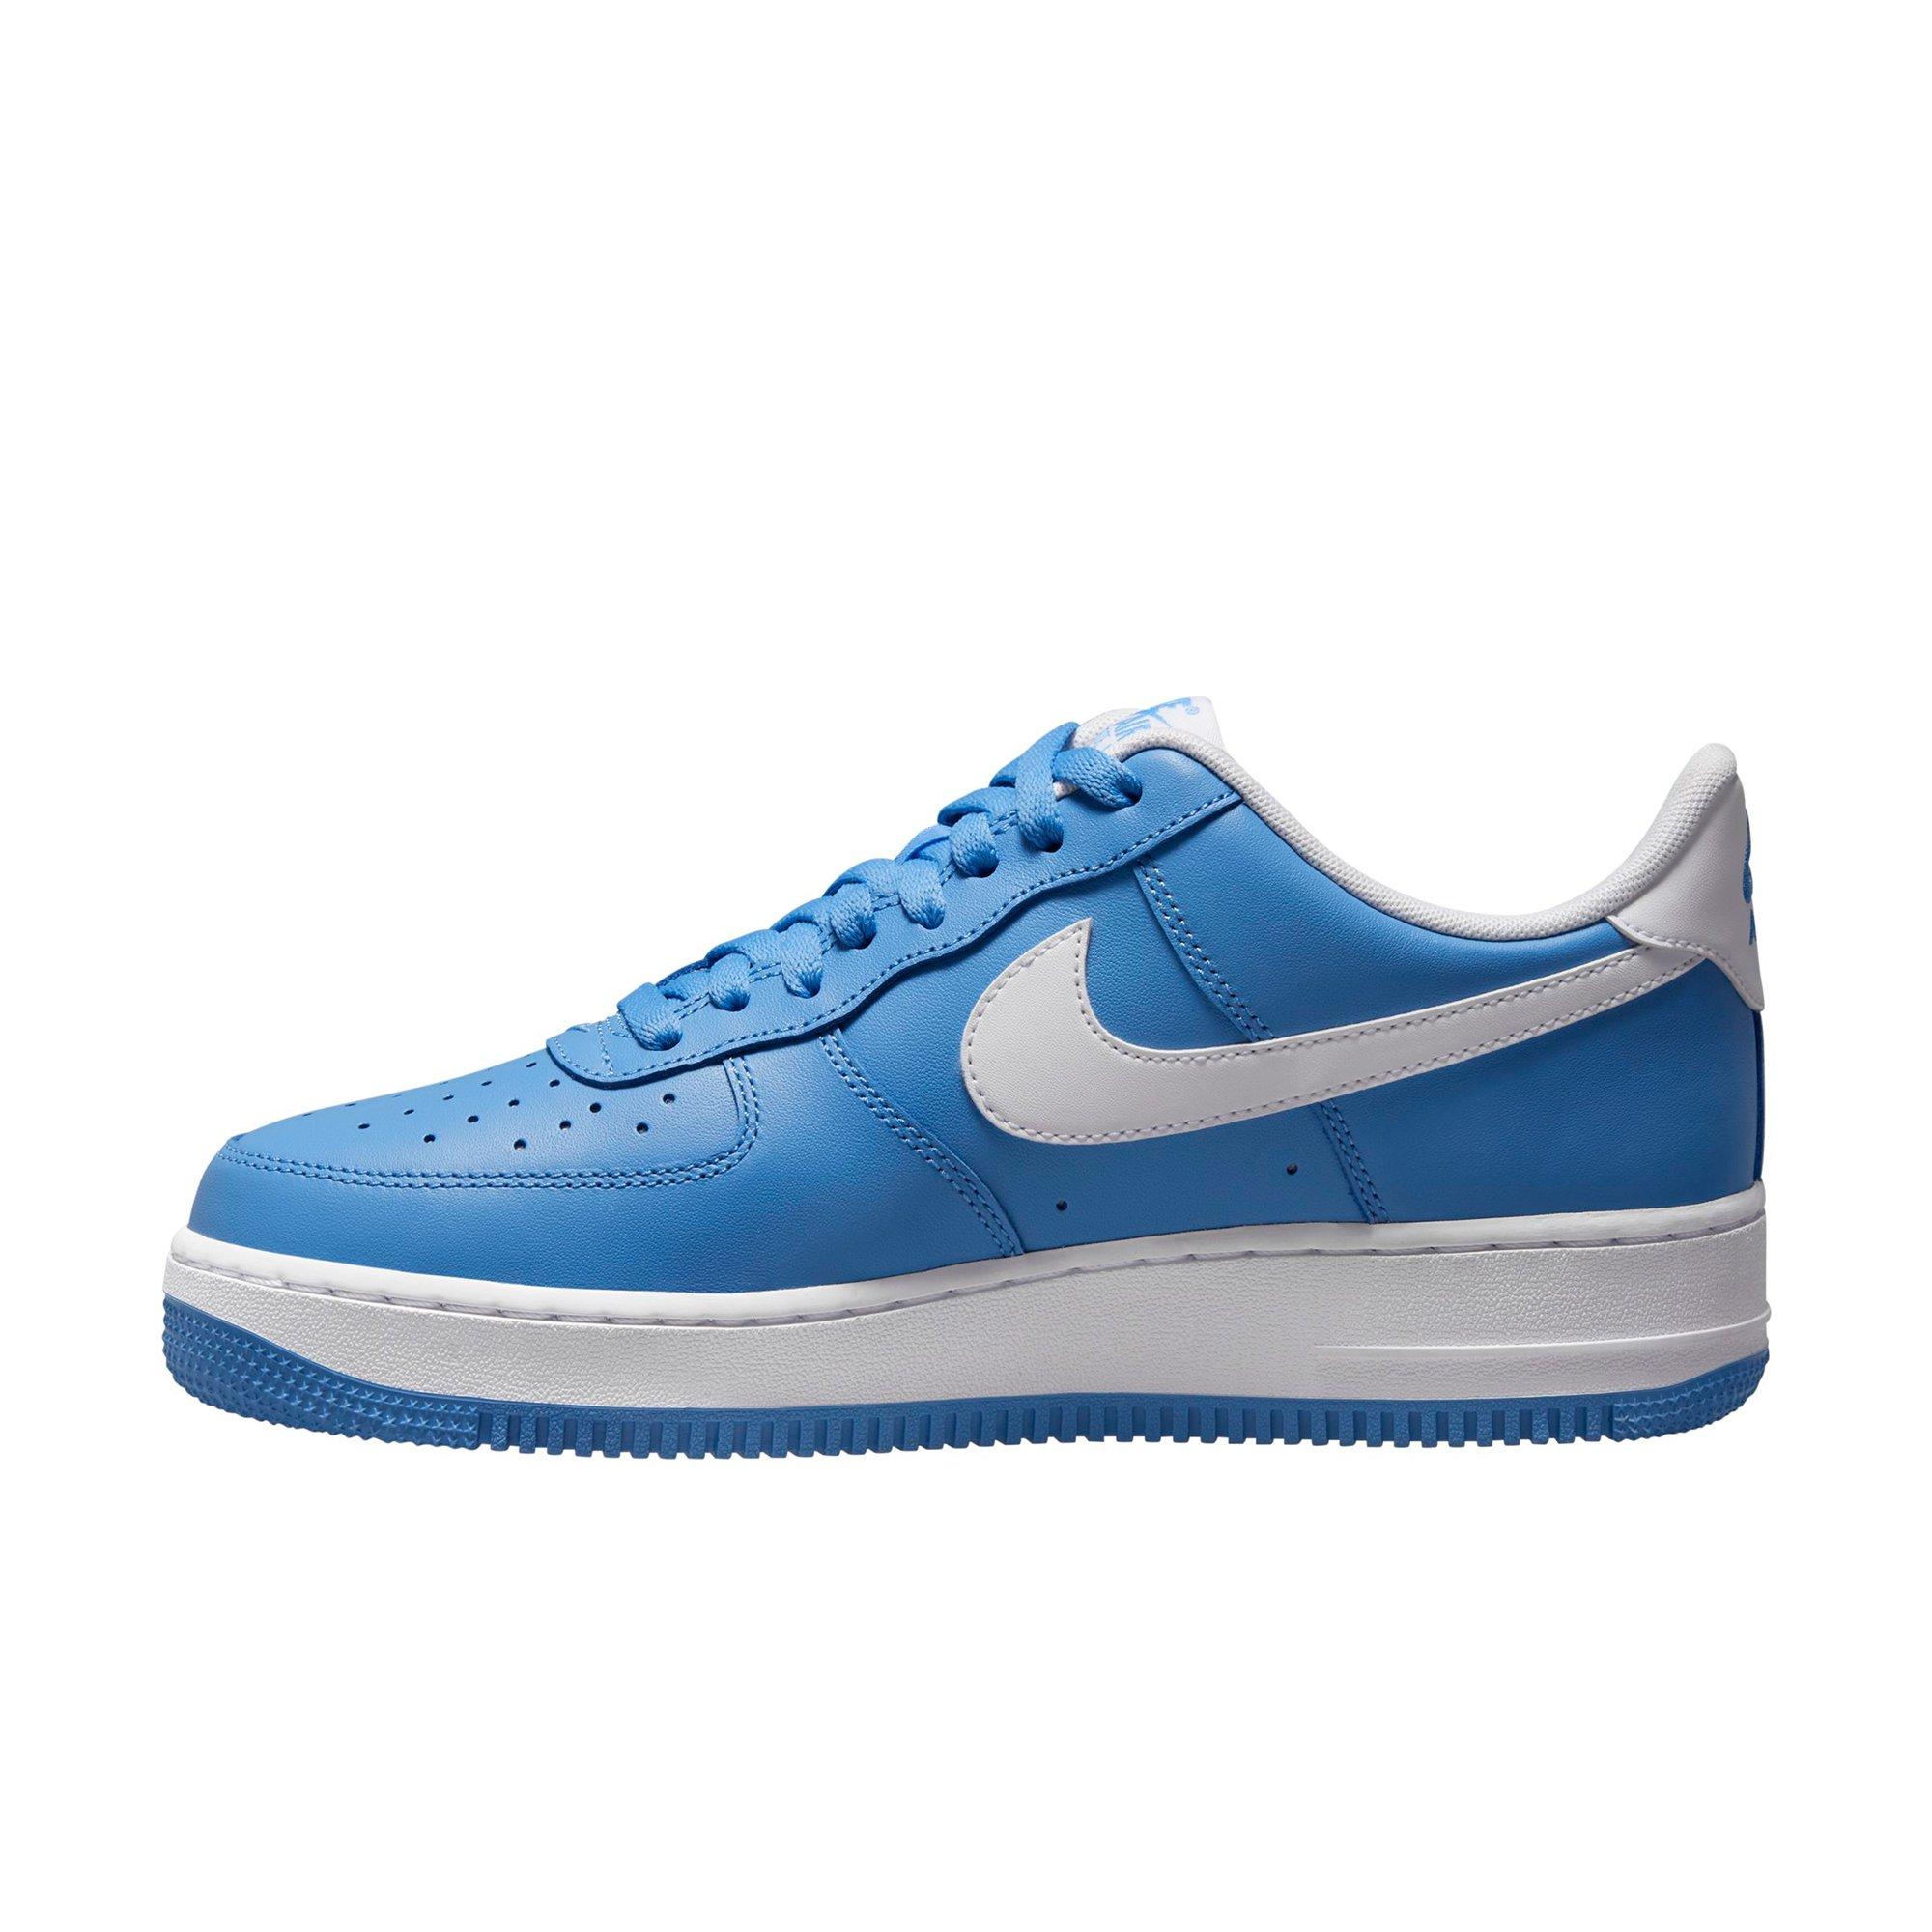 Nike Air Force 1 '07 (White/University Blue) 11